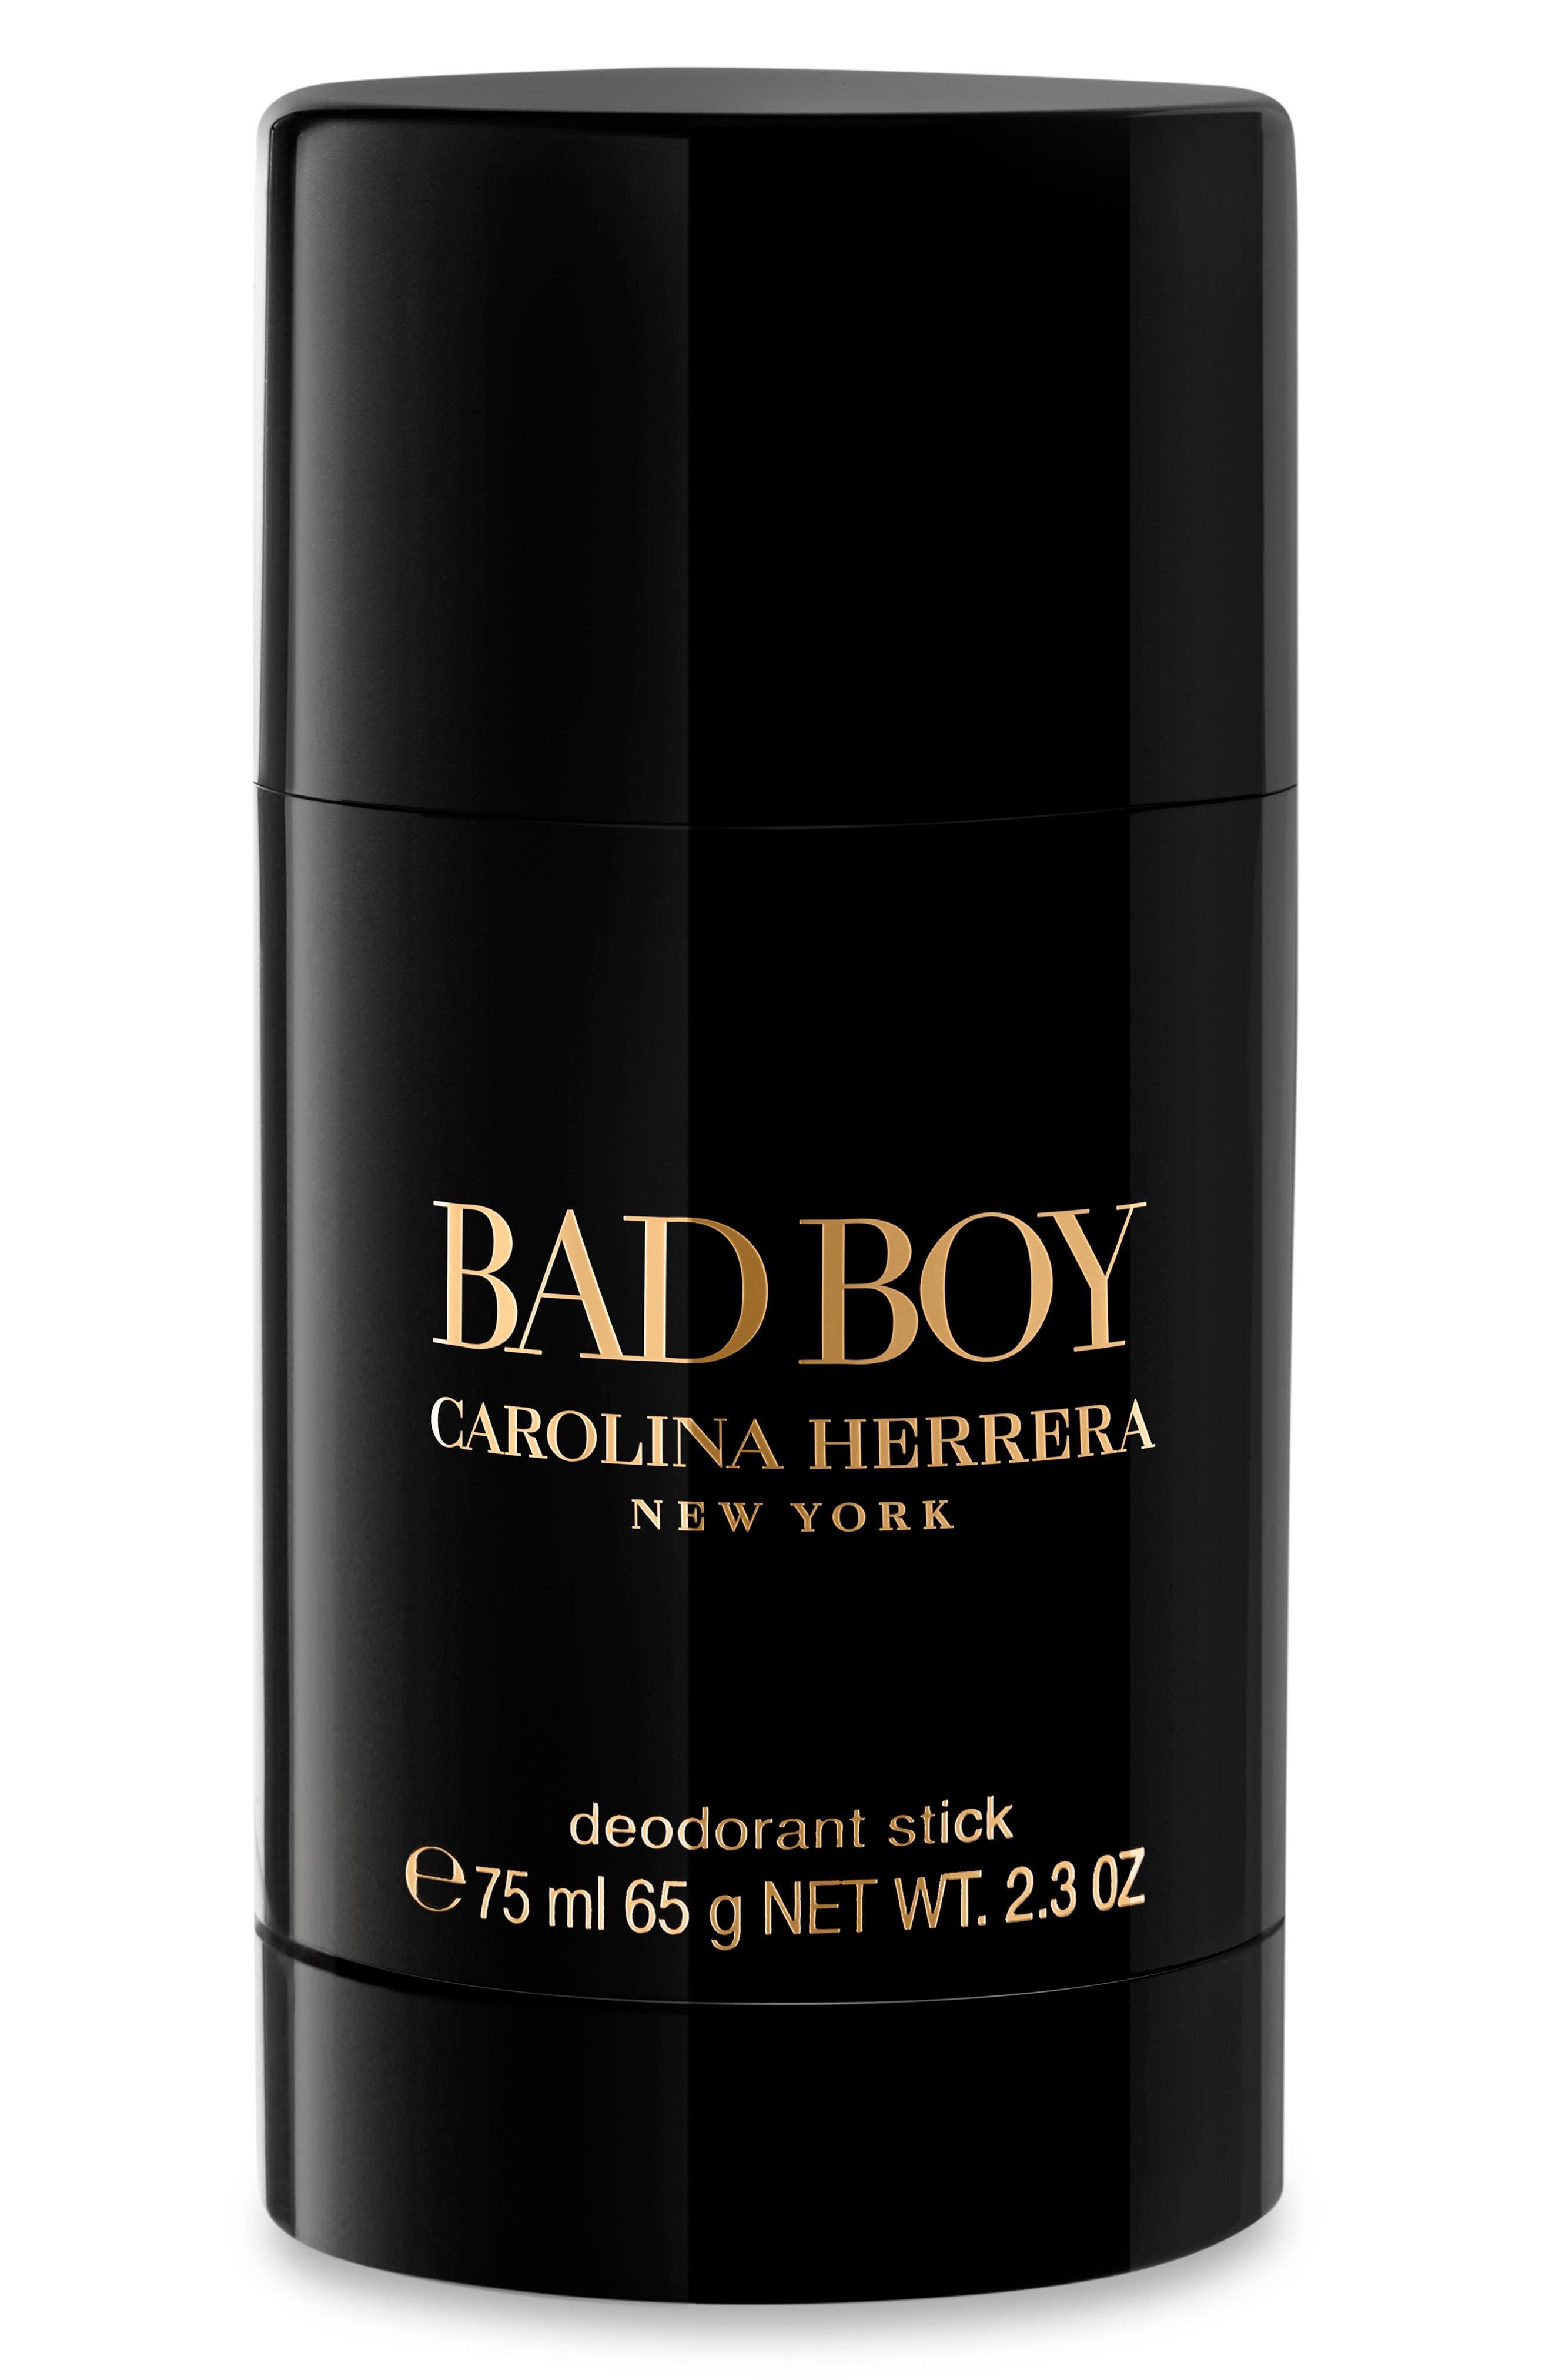 Carolina Herrera Bad Boy Deodorant Stick at Nordstrom